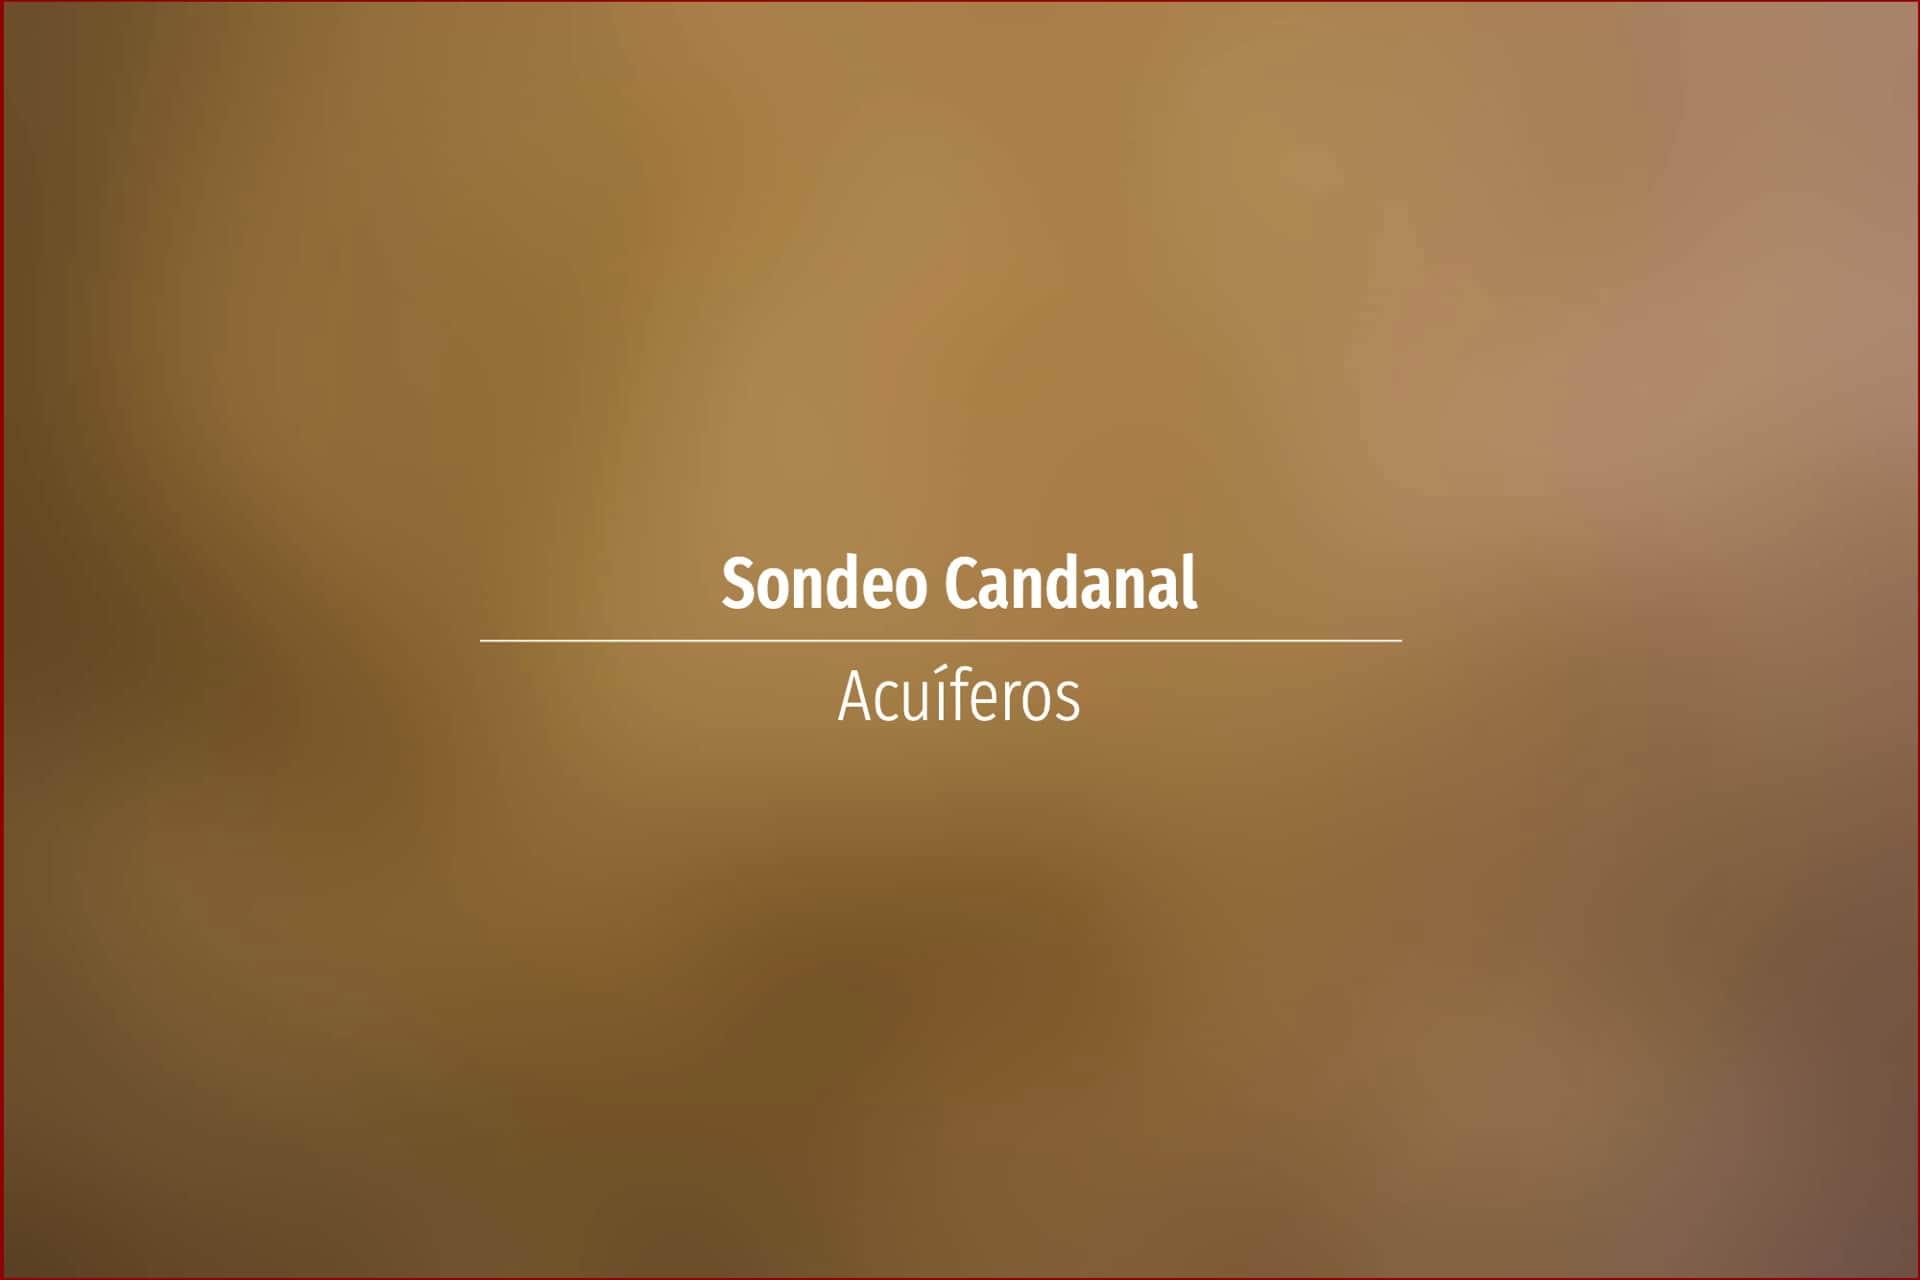 Sondeo Candanal